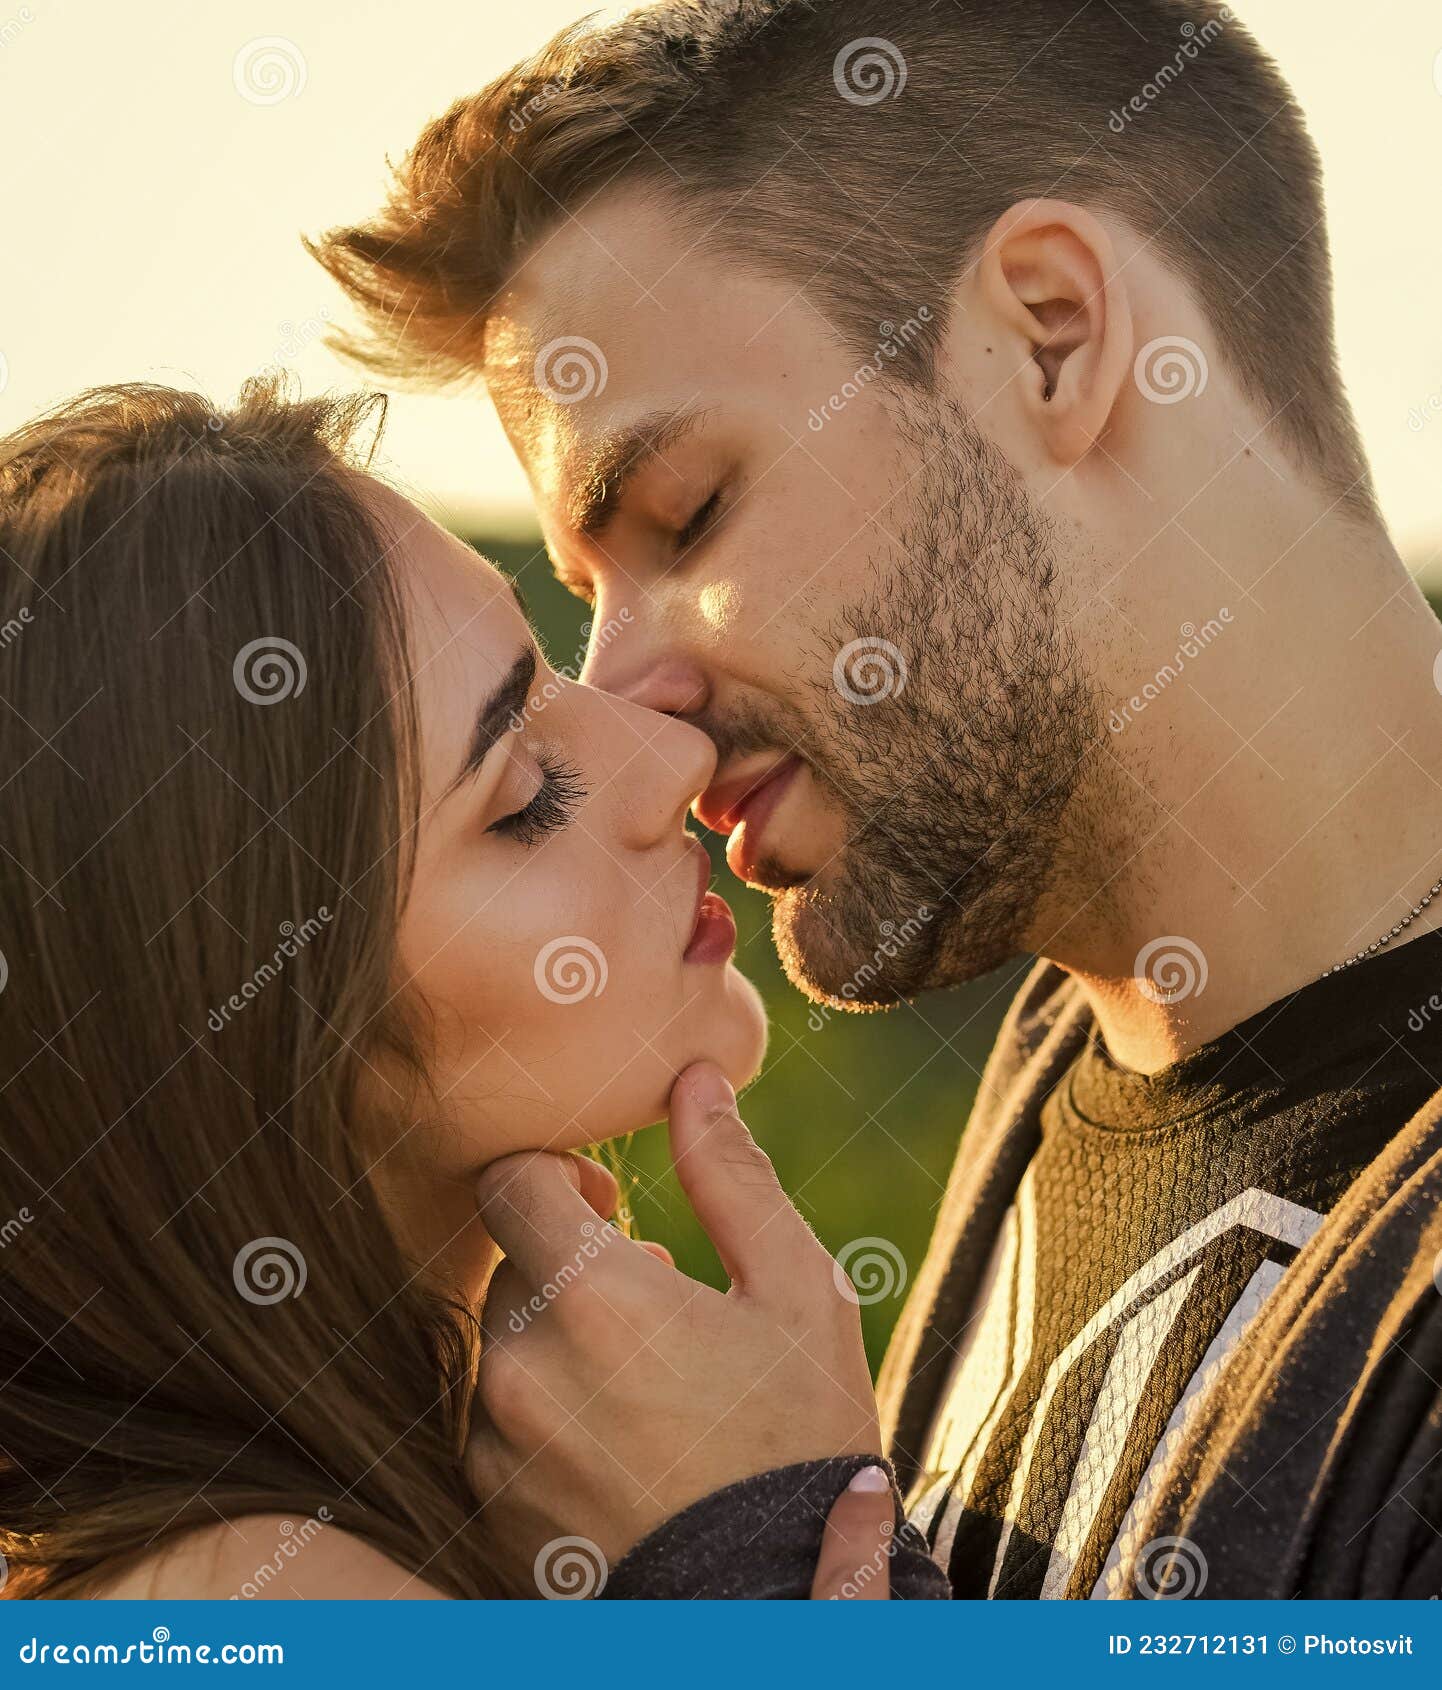 Hot Sexy Girl Kiss